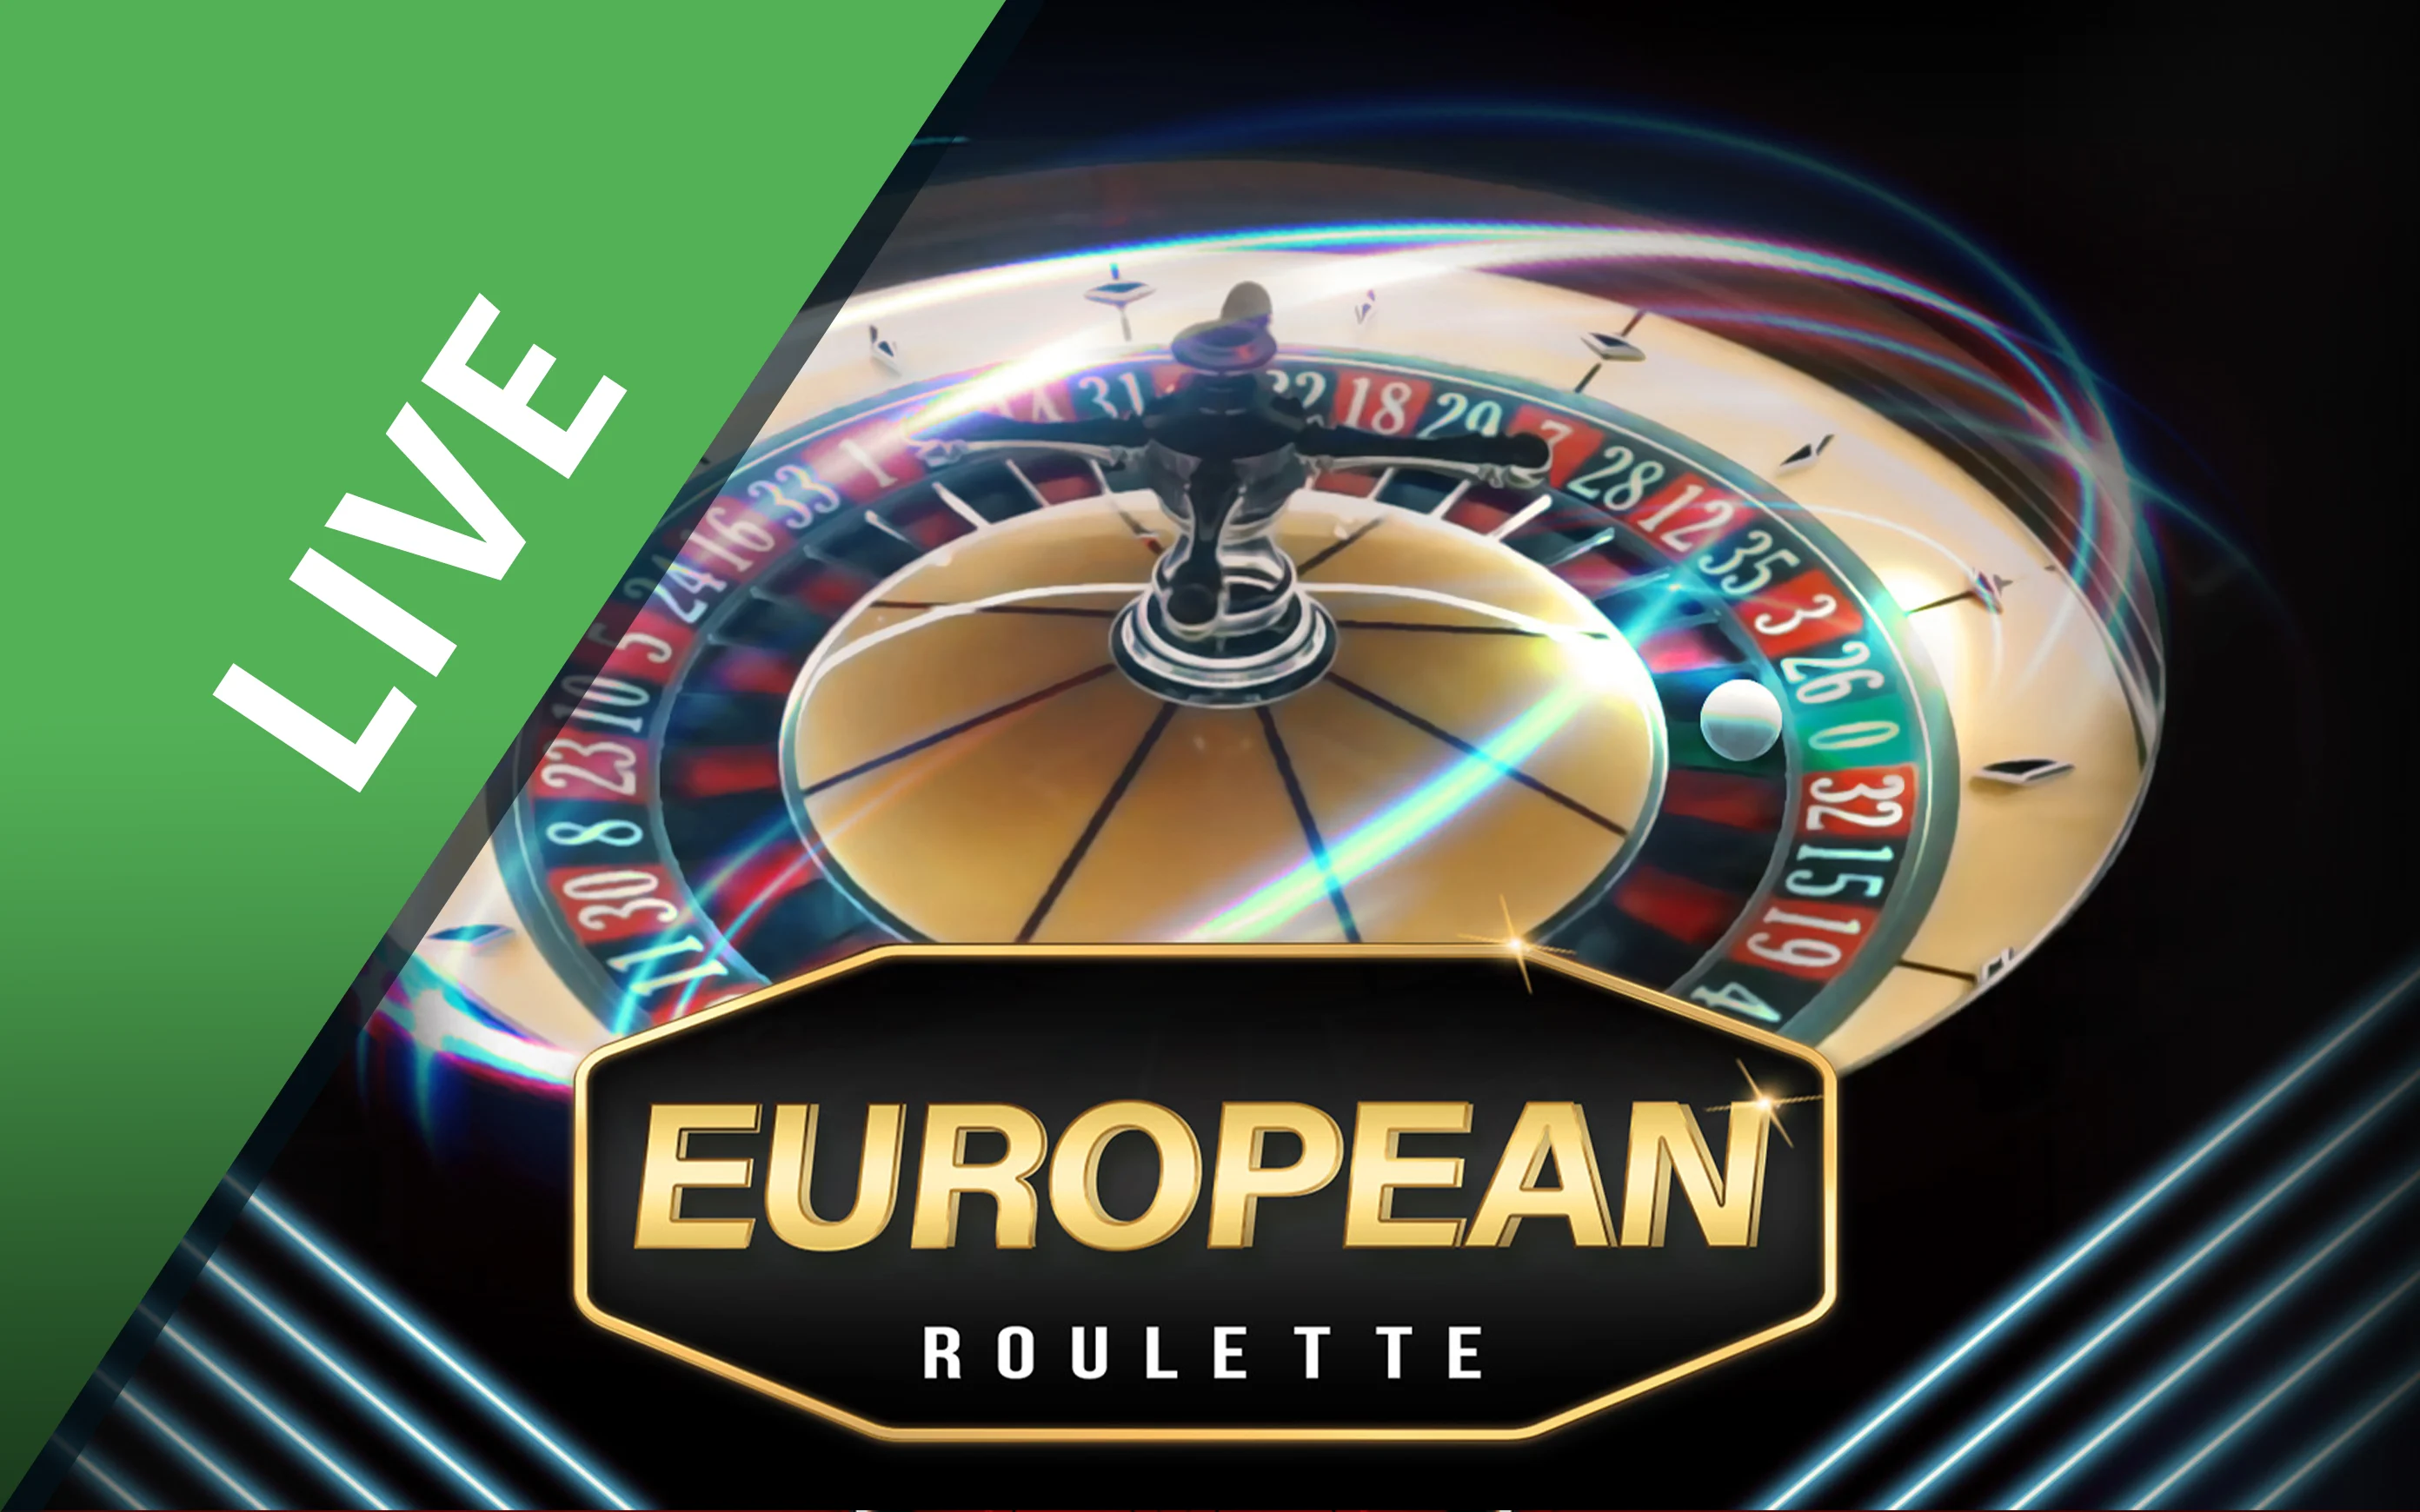 Juega a European Roulette en el casino en línea de Starcasino.be